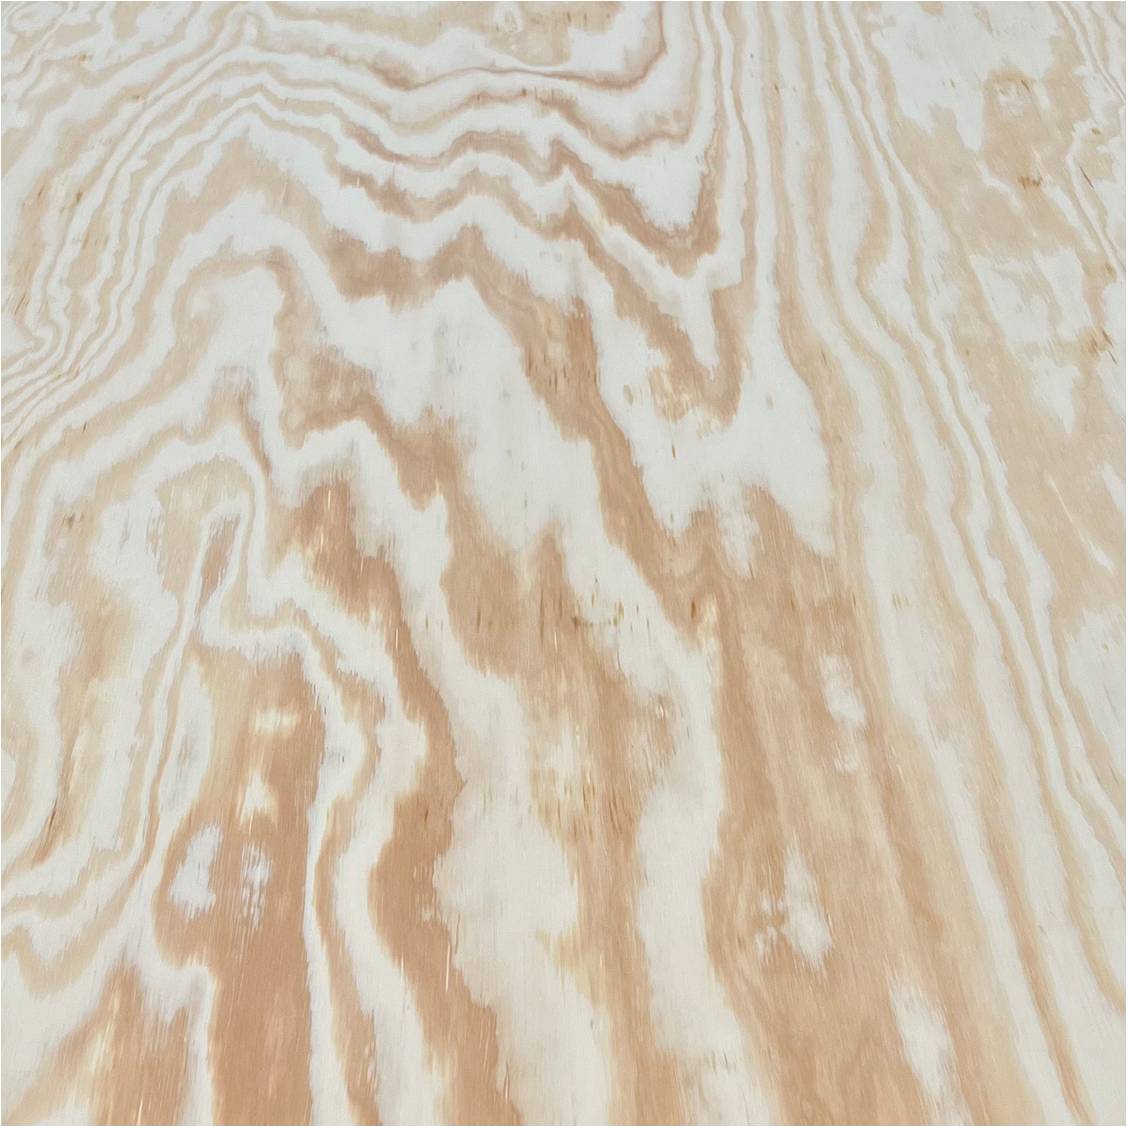 Polish ‘Thick’ Pine Plywood